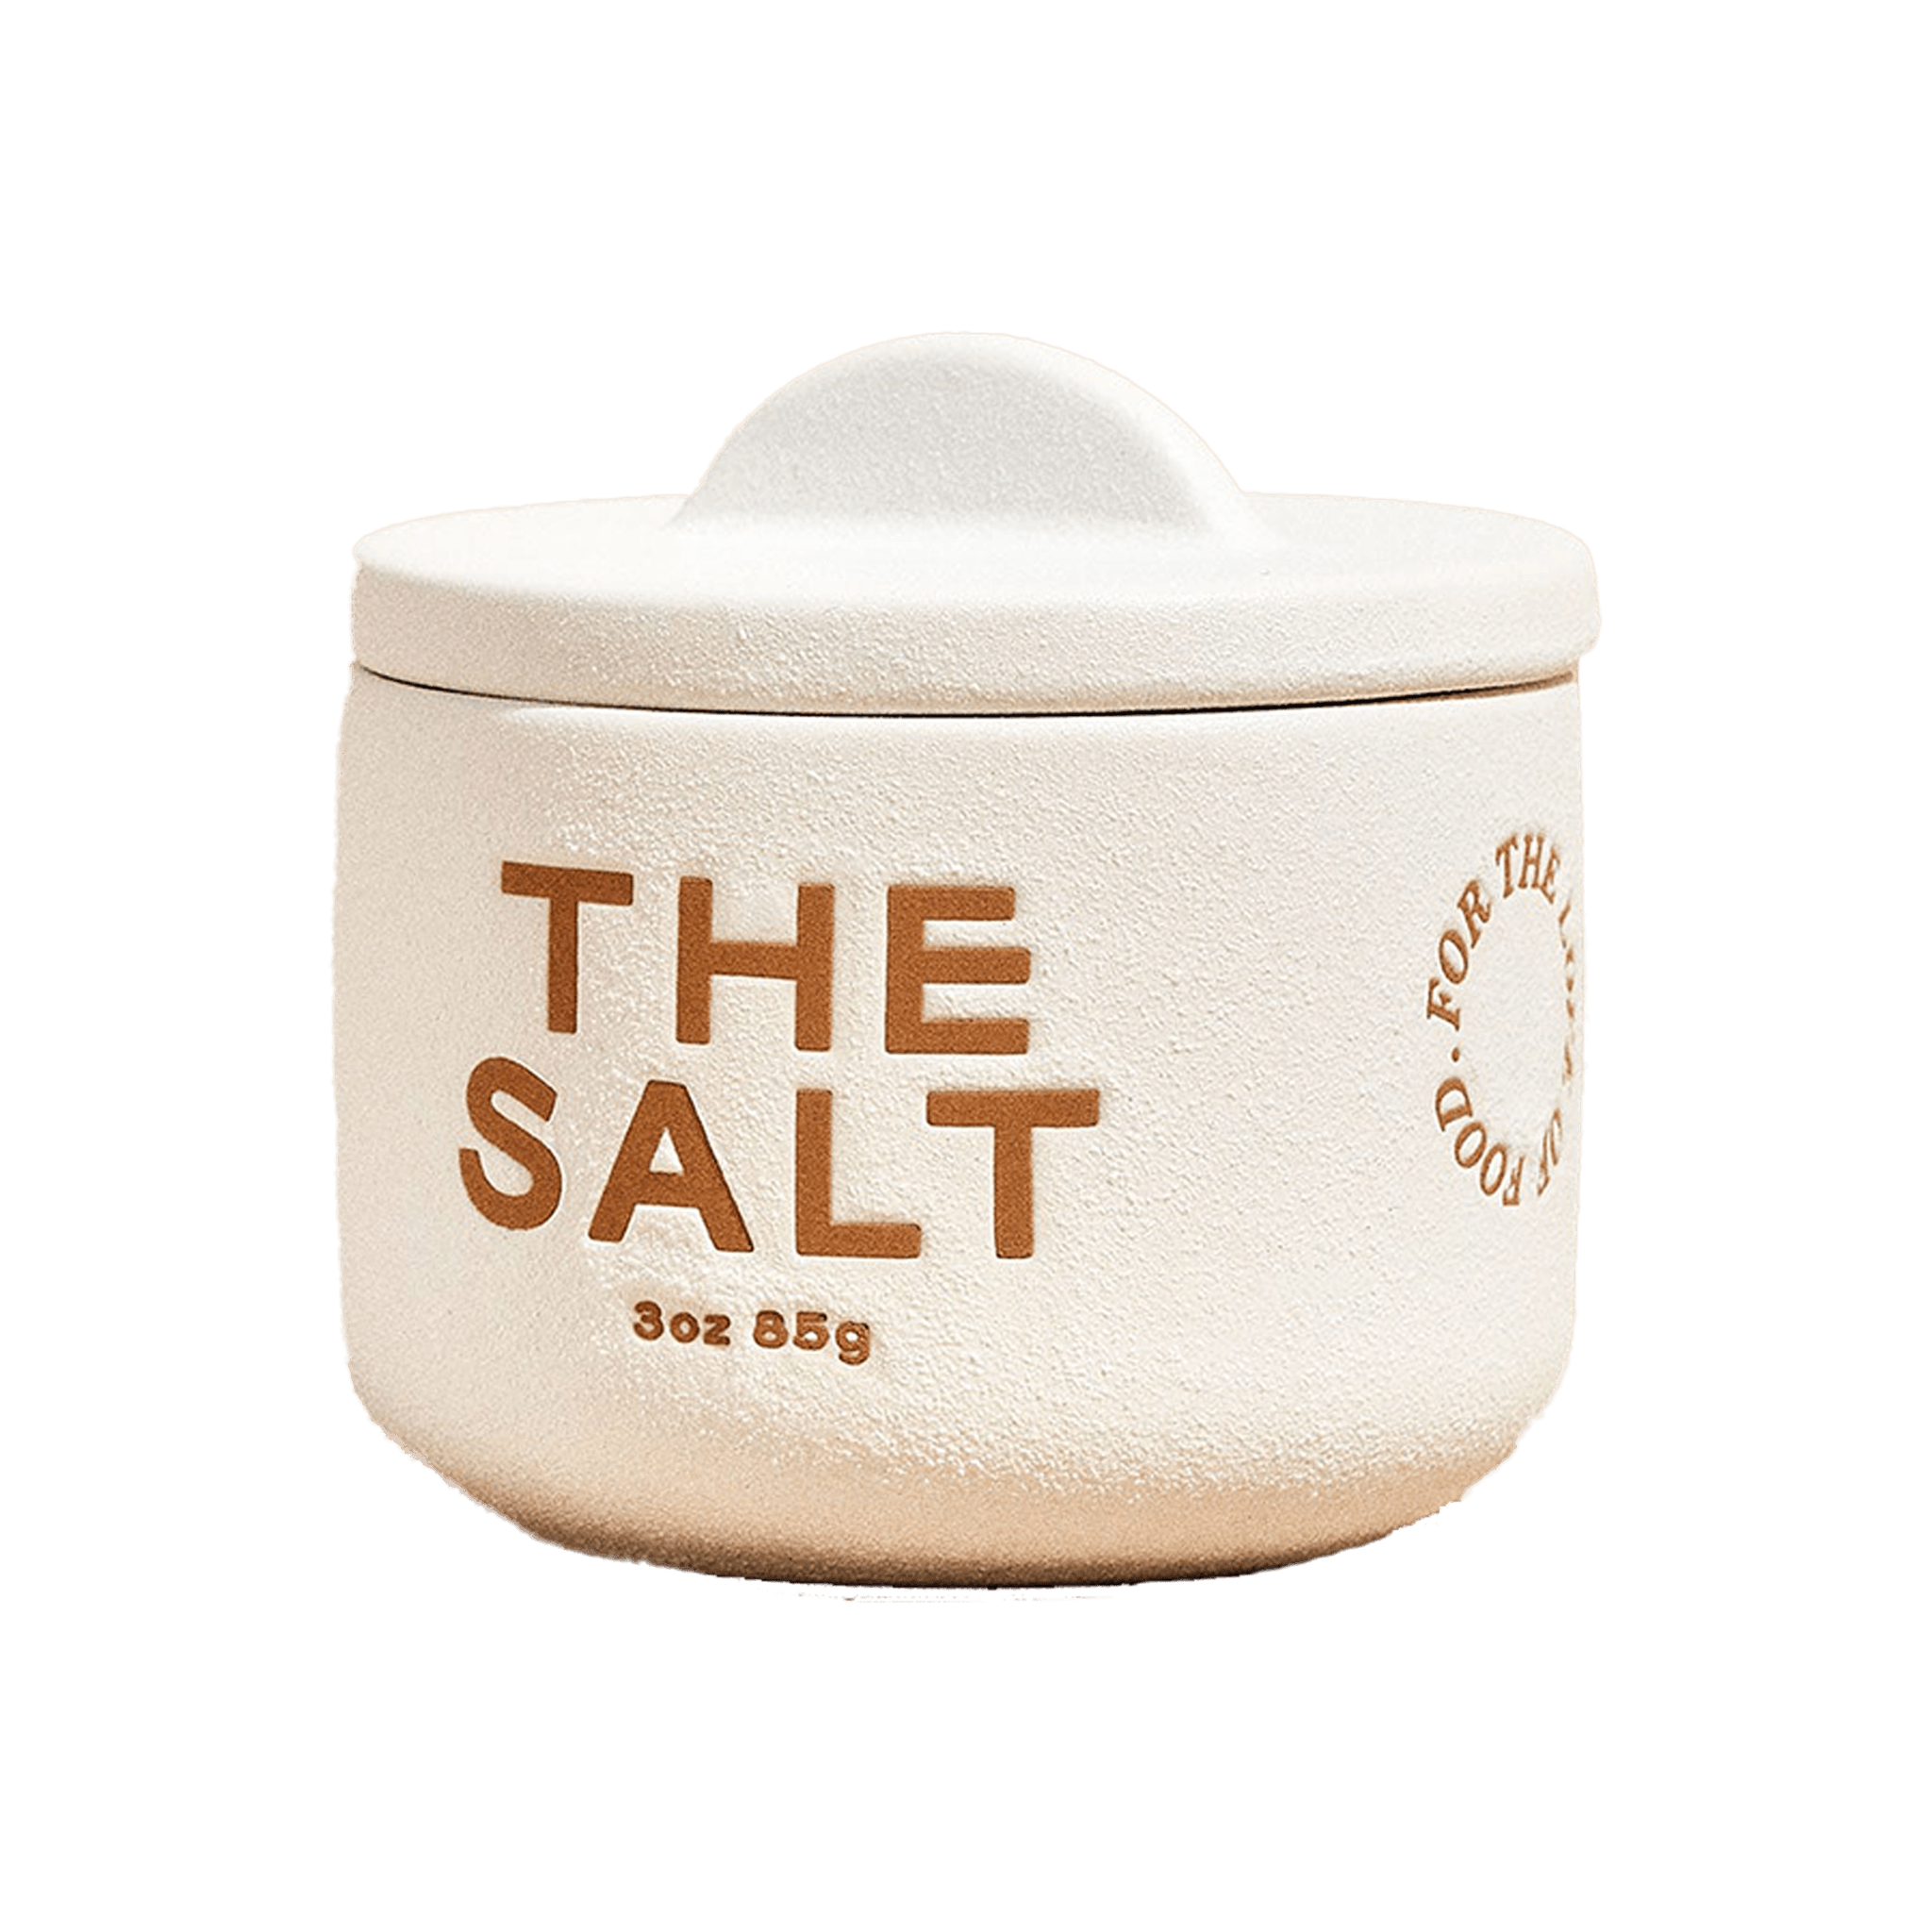 The Salt - Pineapple Collaborative - Consumerhaus